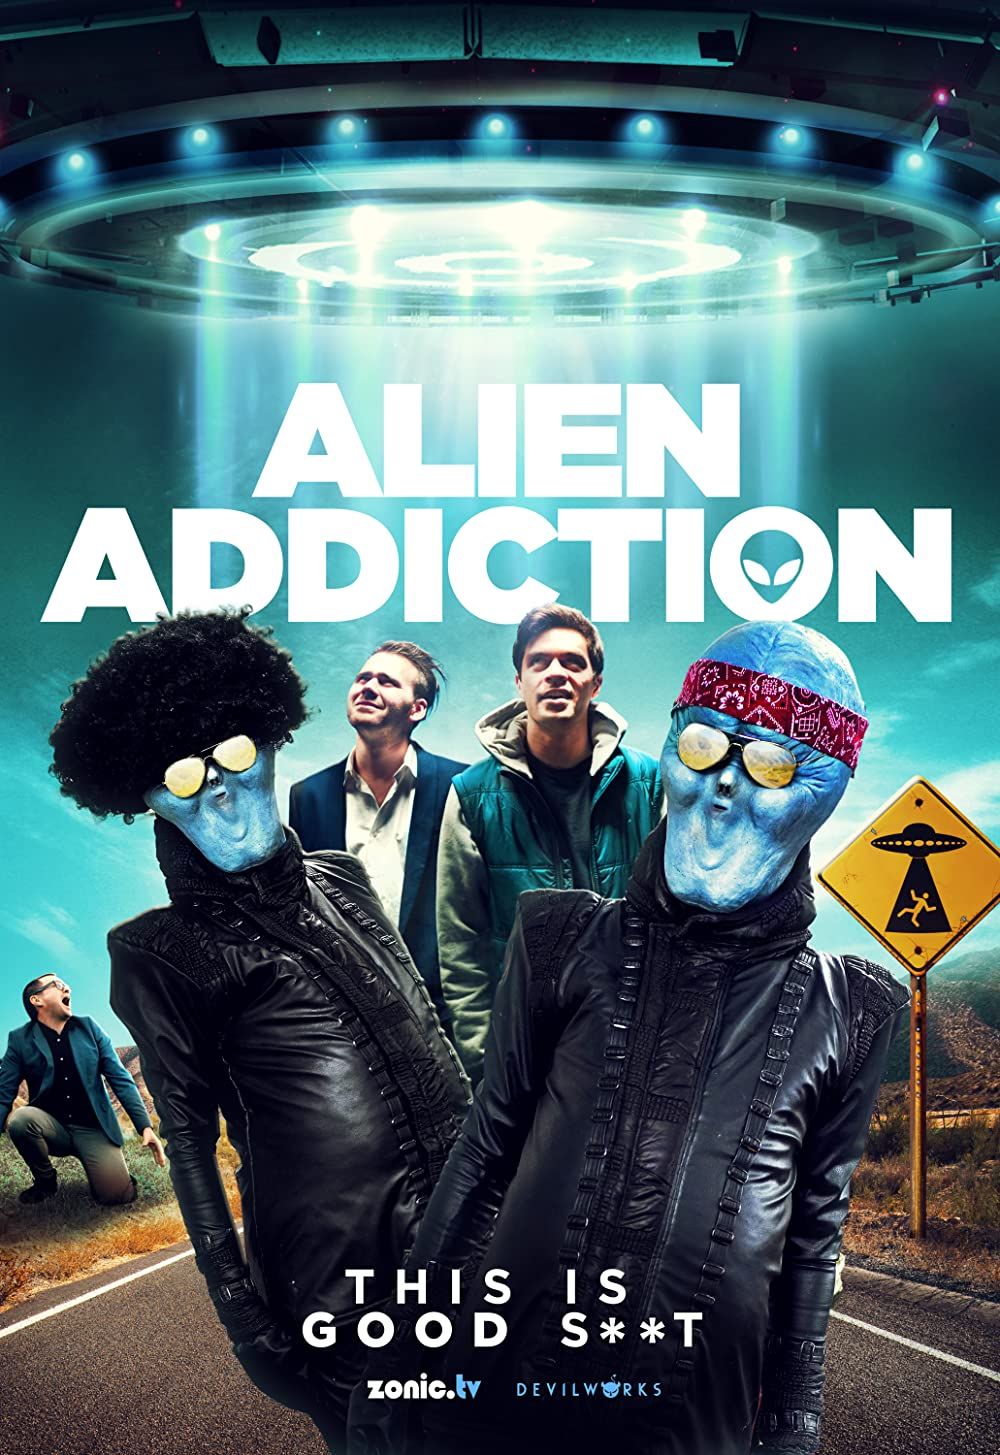 Alien Addiction (2018) Hindi ORG Dubbed BluRay download full movie